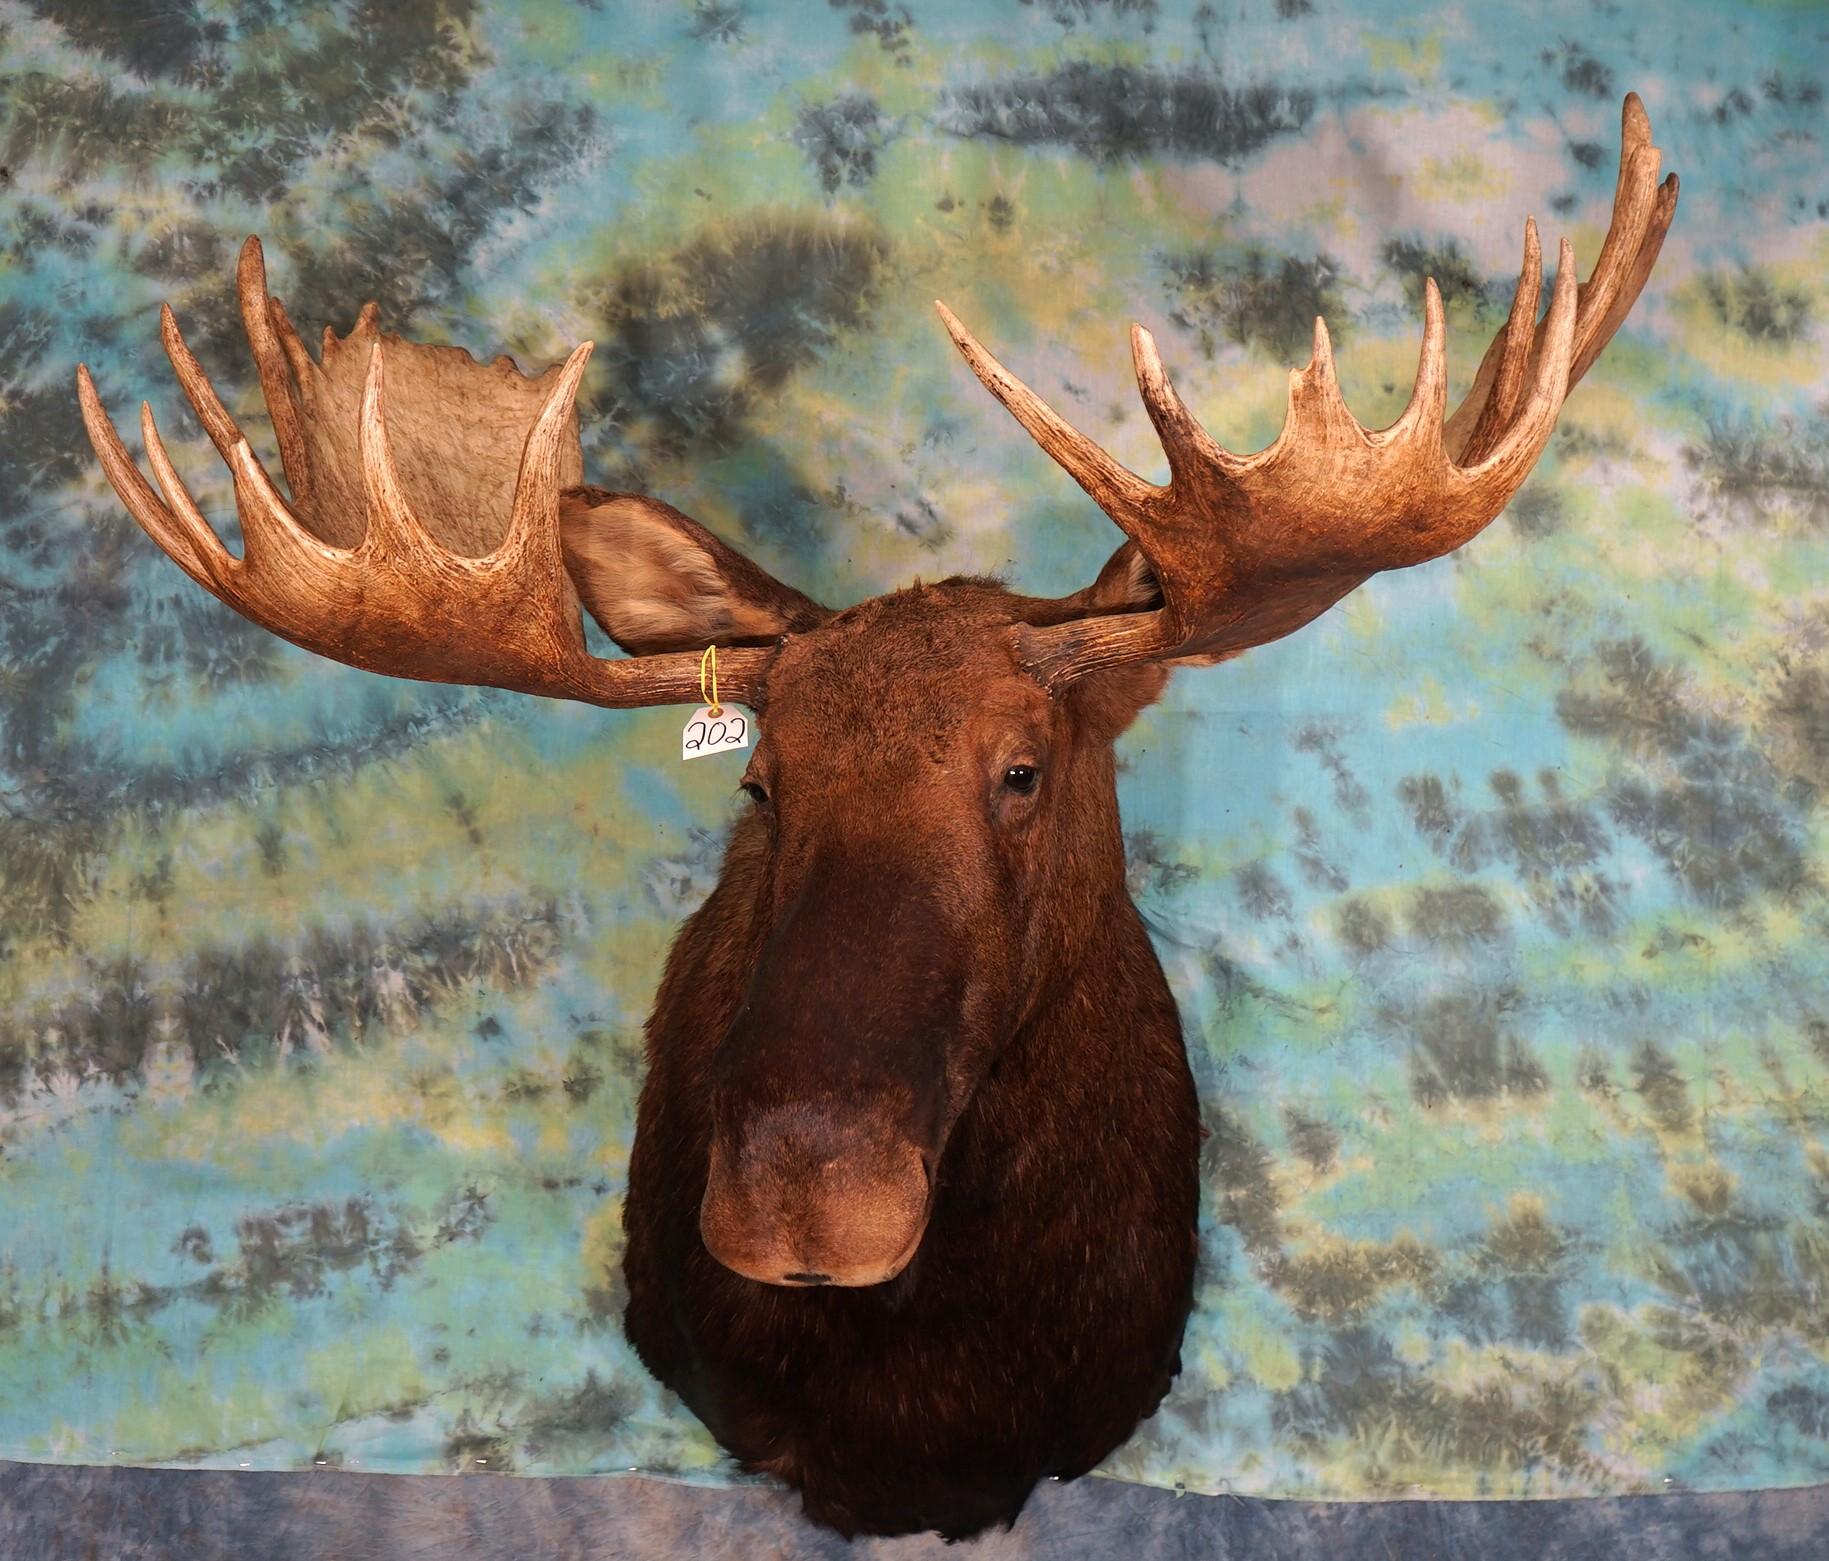 Boone & Crockett Canadian Moose Shoulder Taxidermy Mount